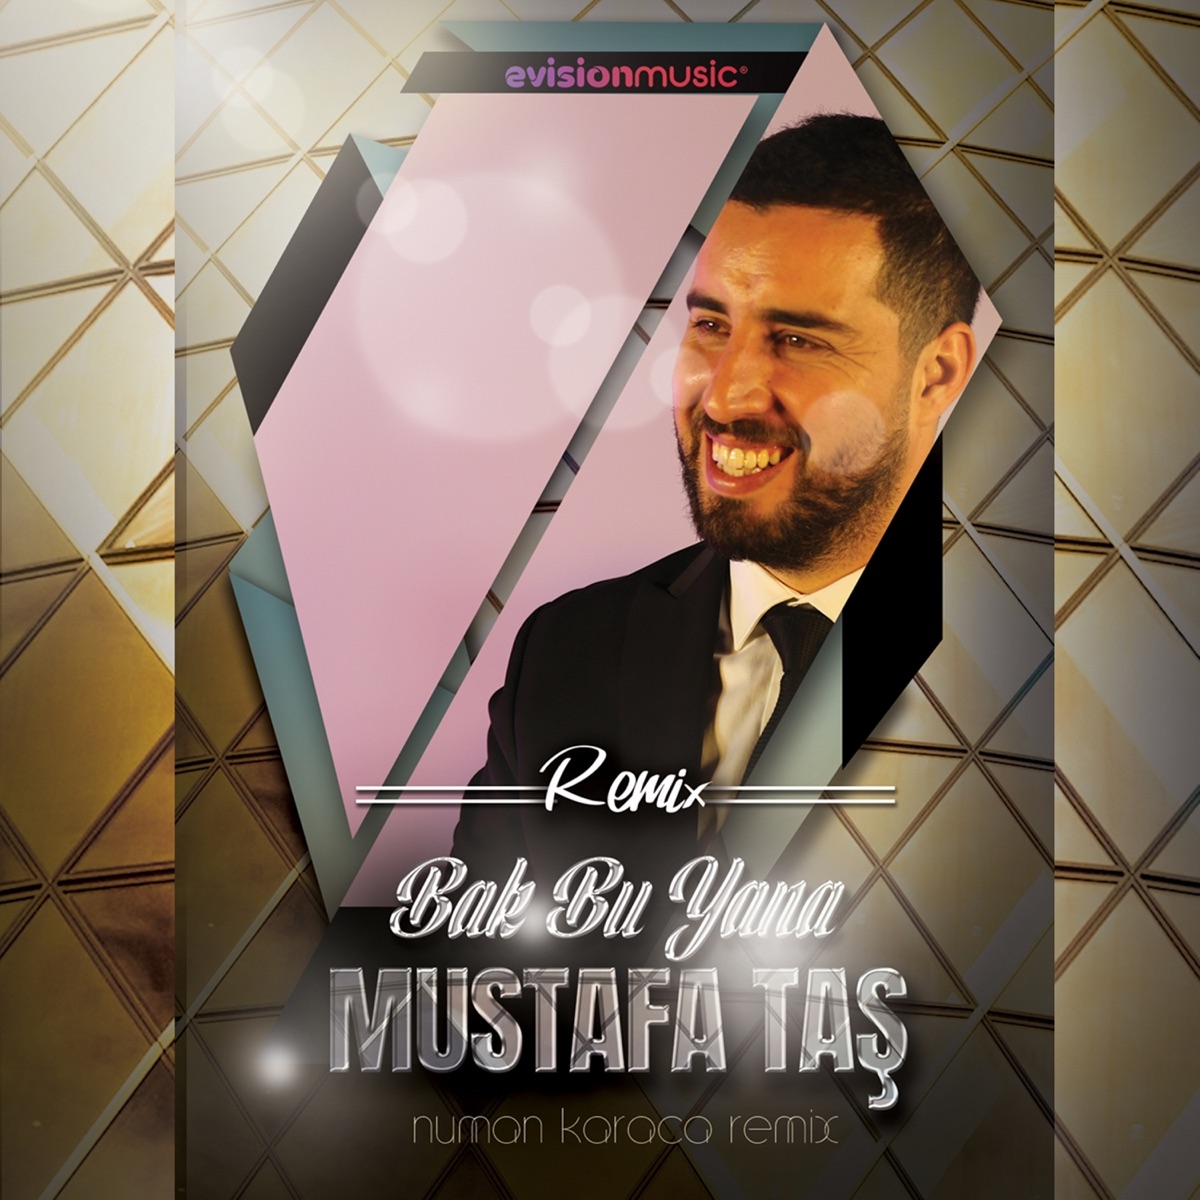 Dost Kazığı - Album by Mustafa Taş - Apple Music